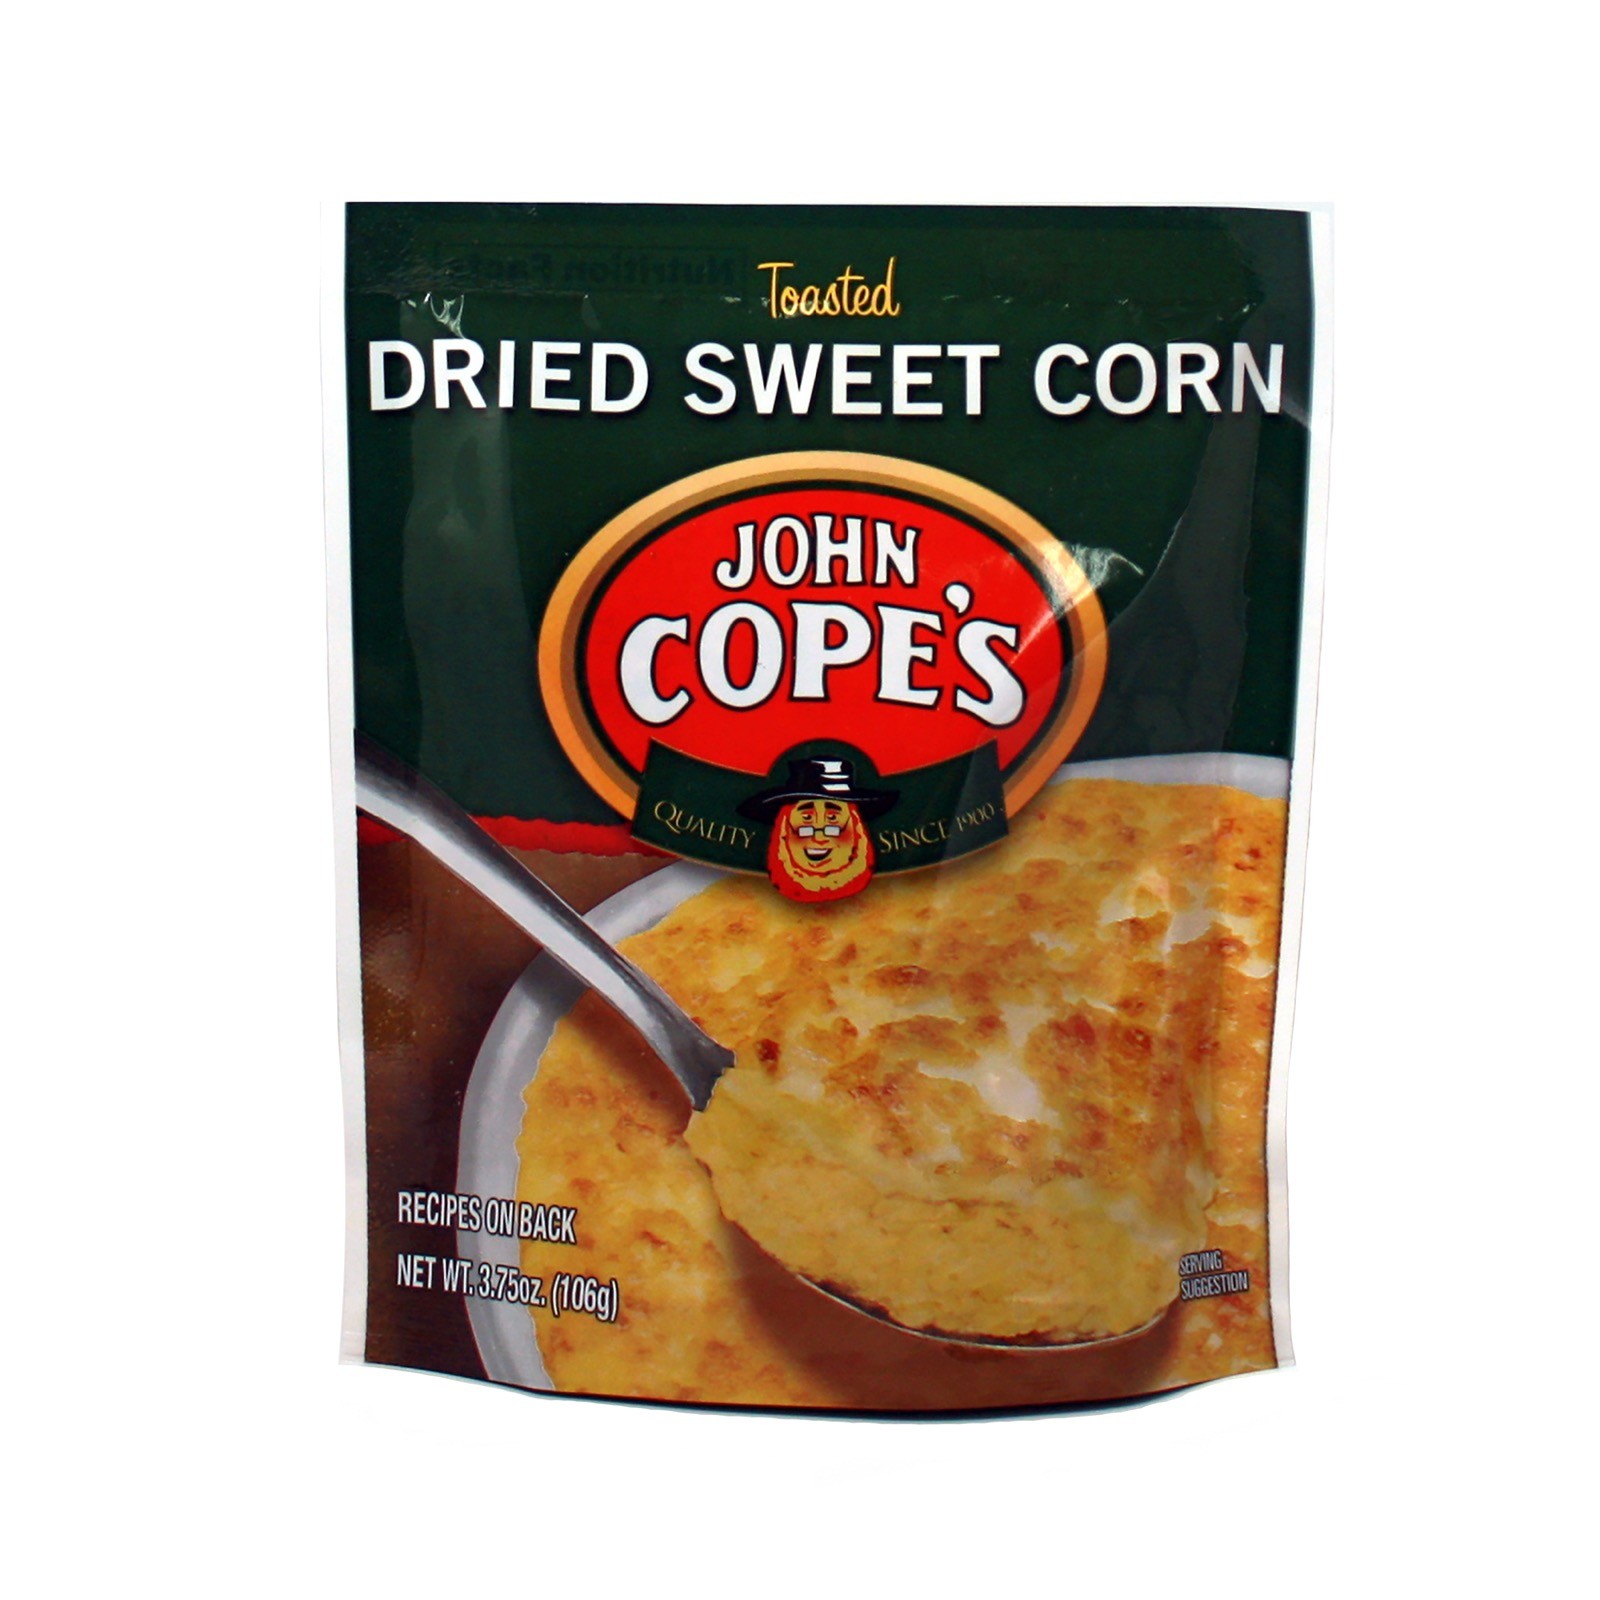 Copes Dried Sweet Corn